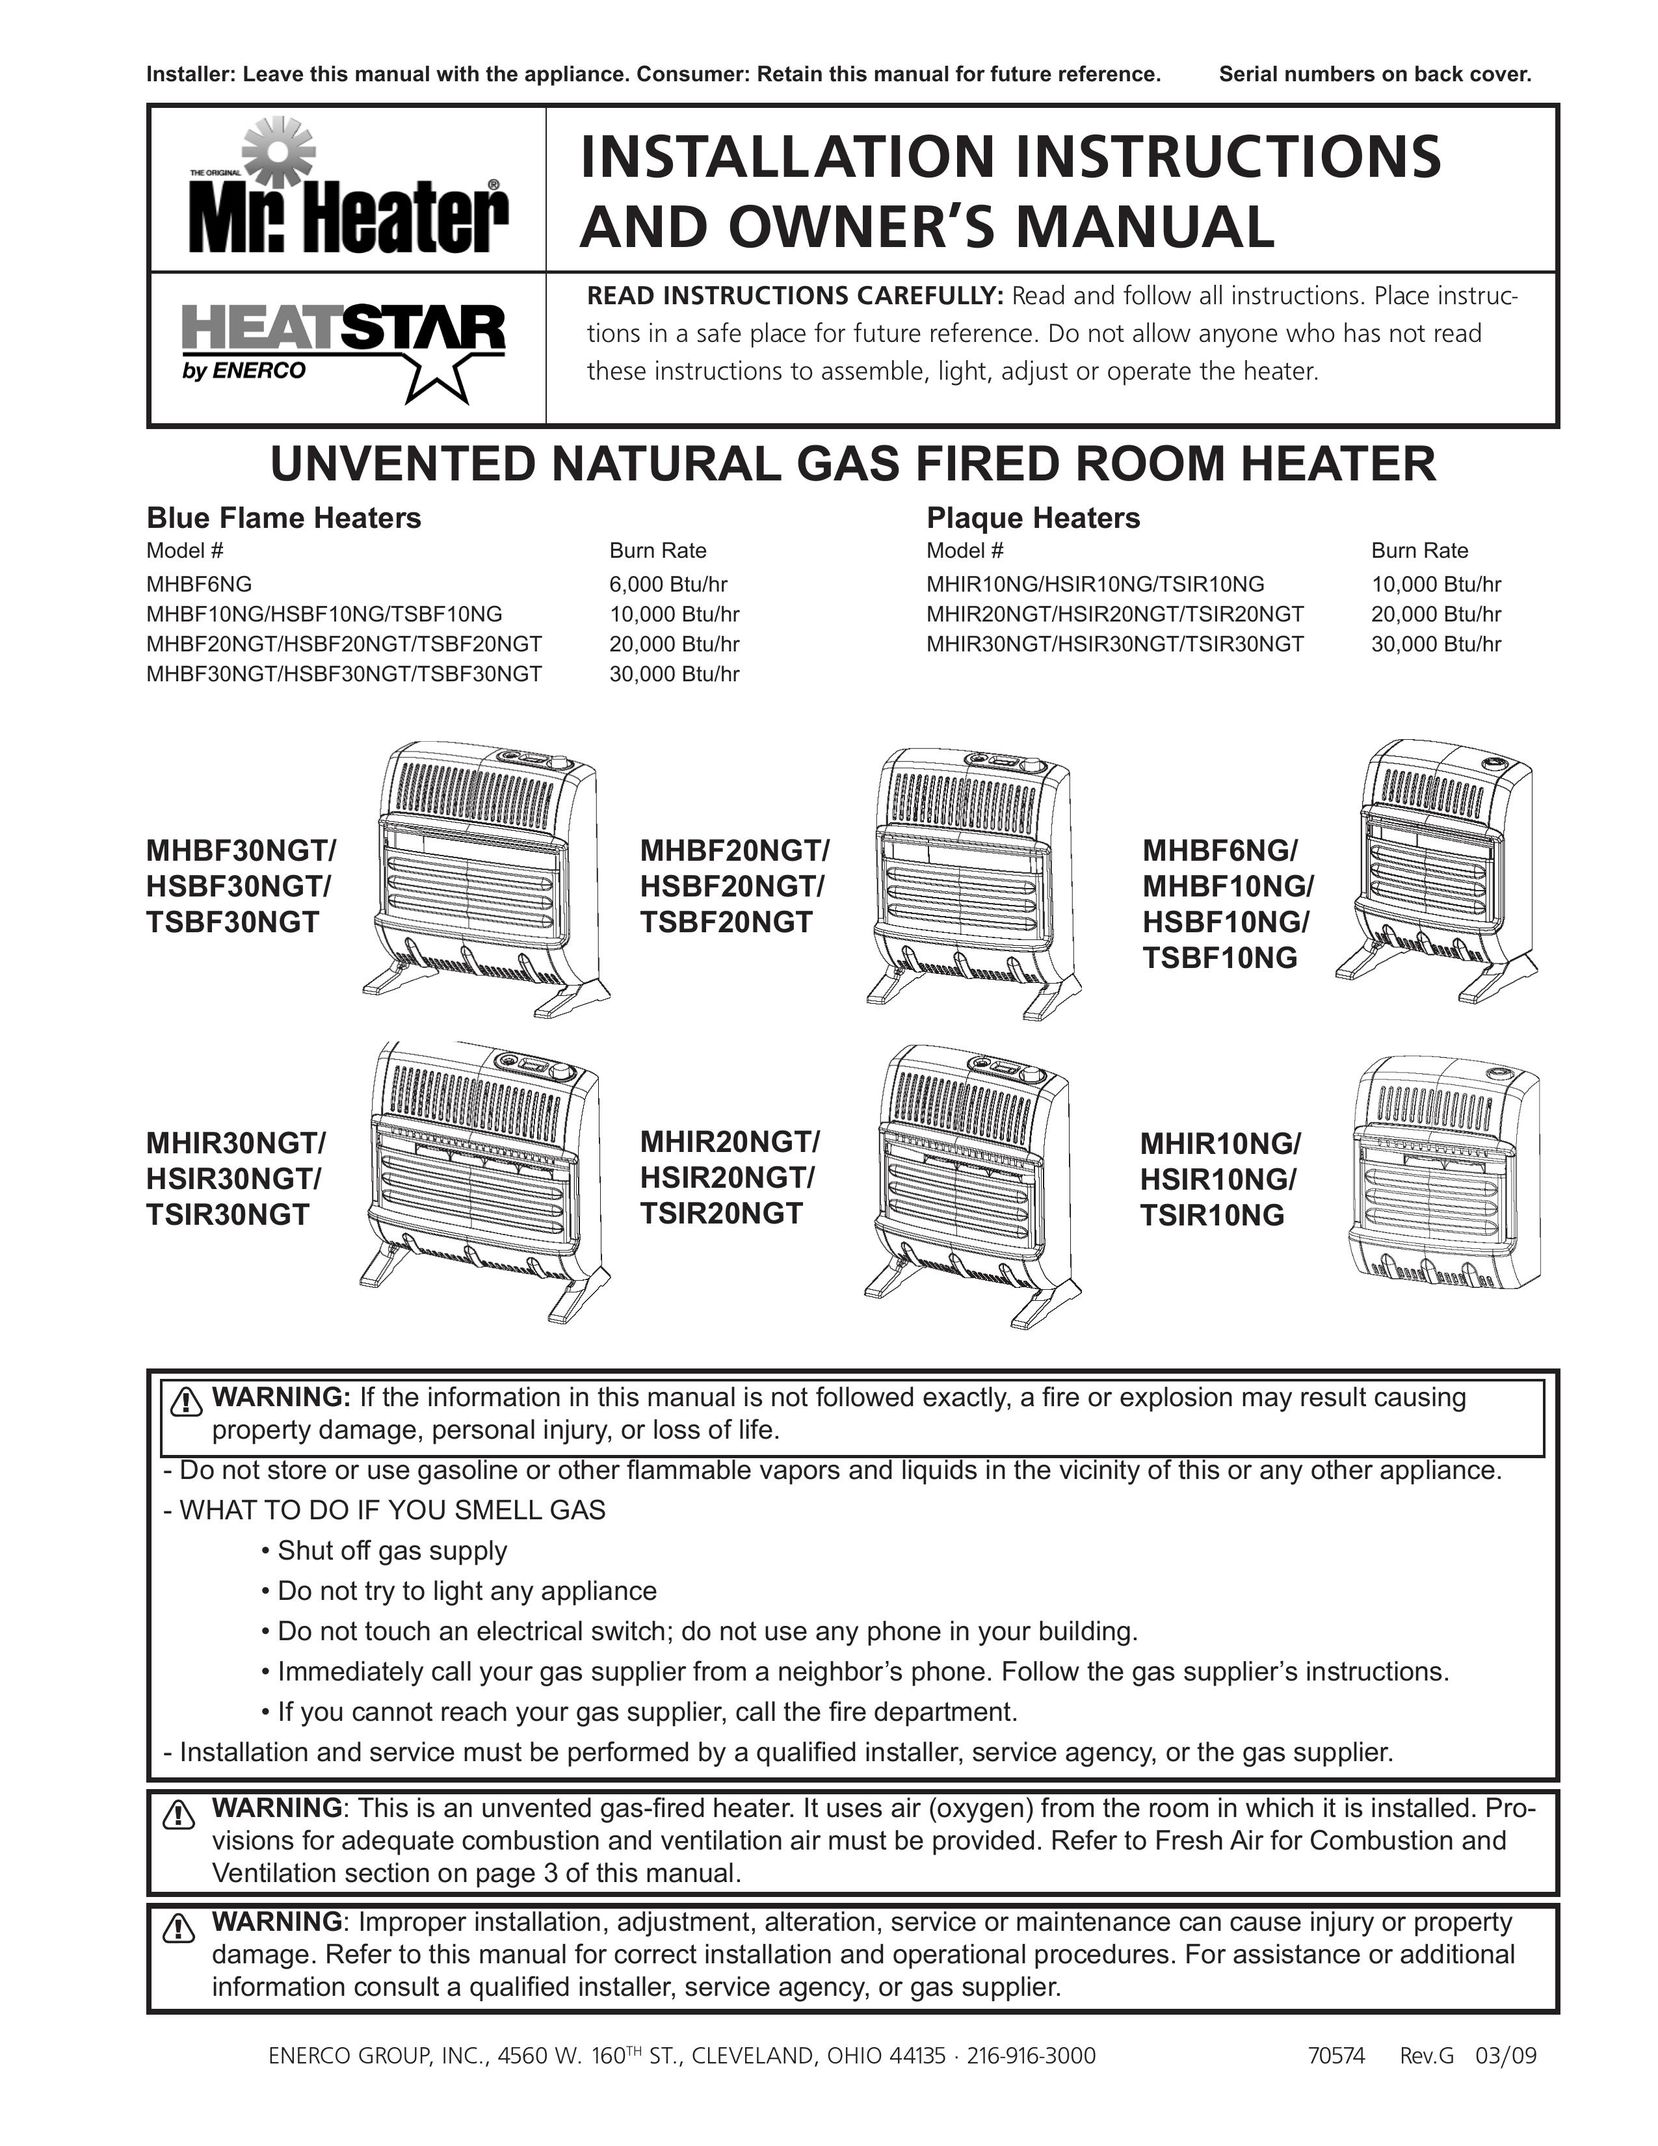 Enerco HSBF10NG Gas Heater User Manual